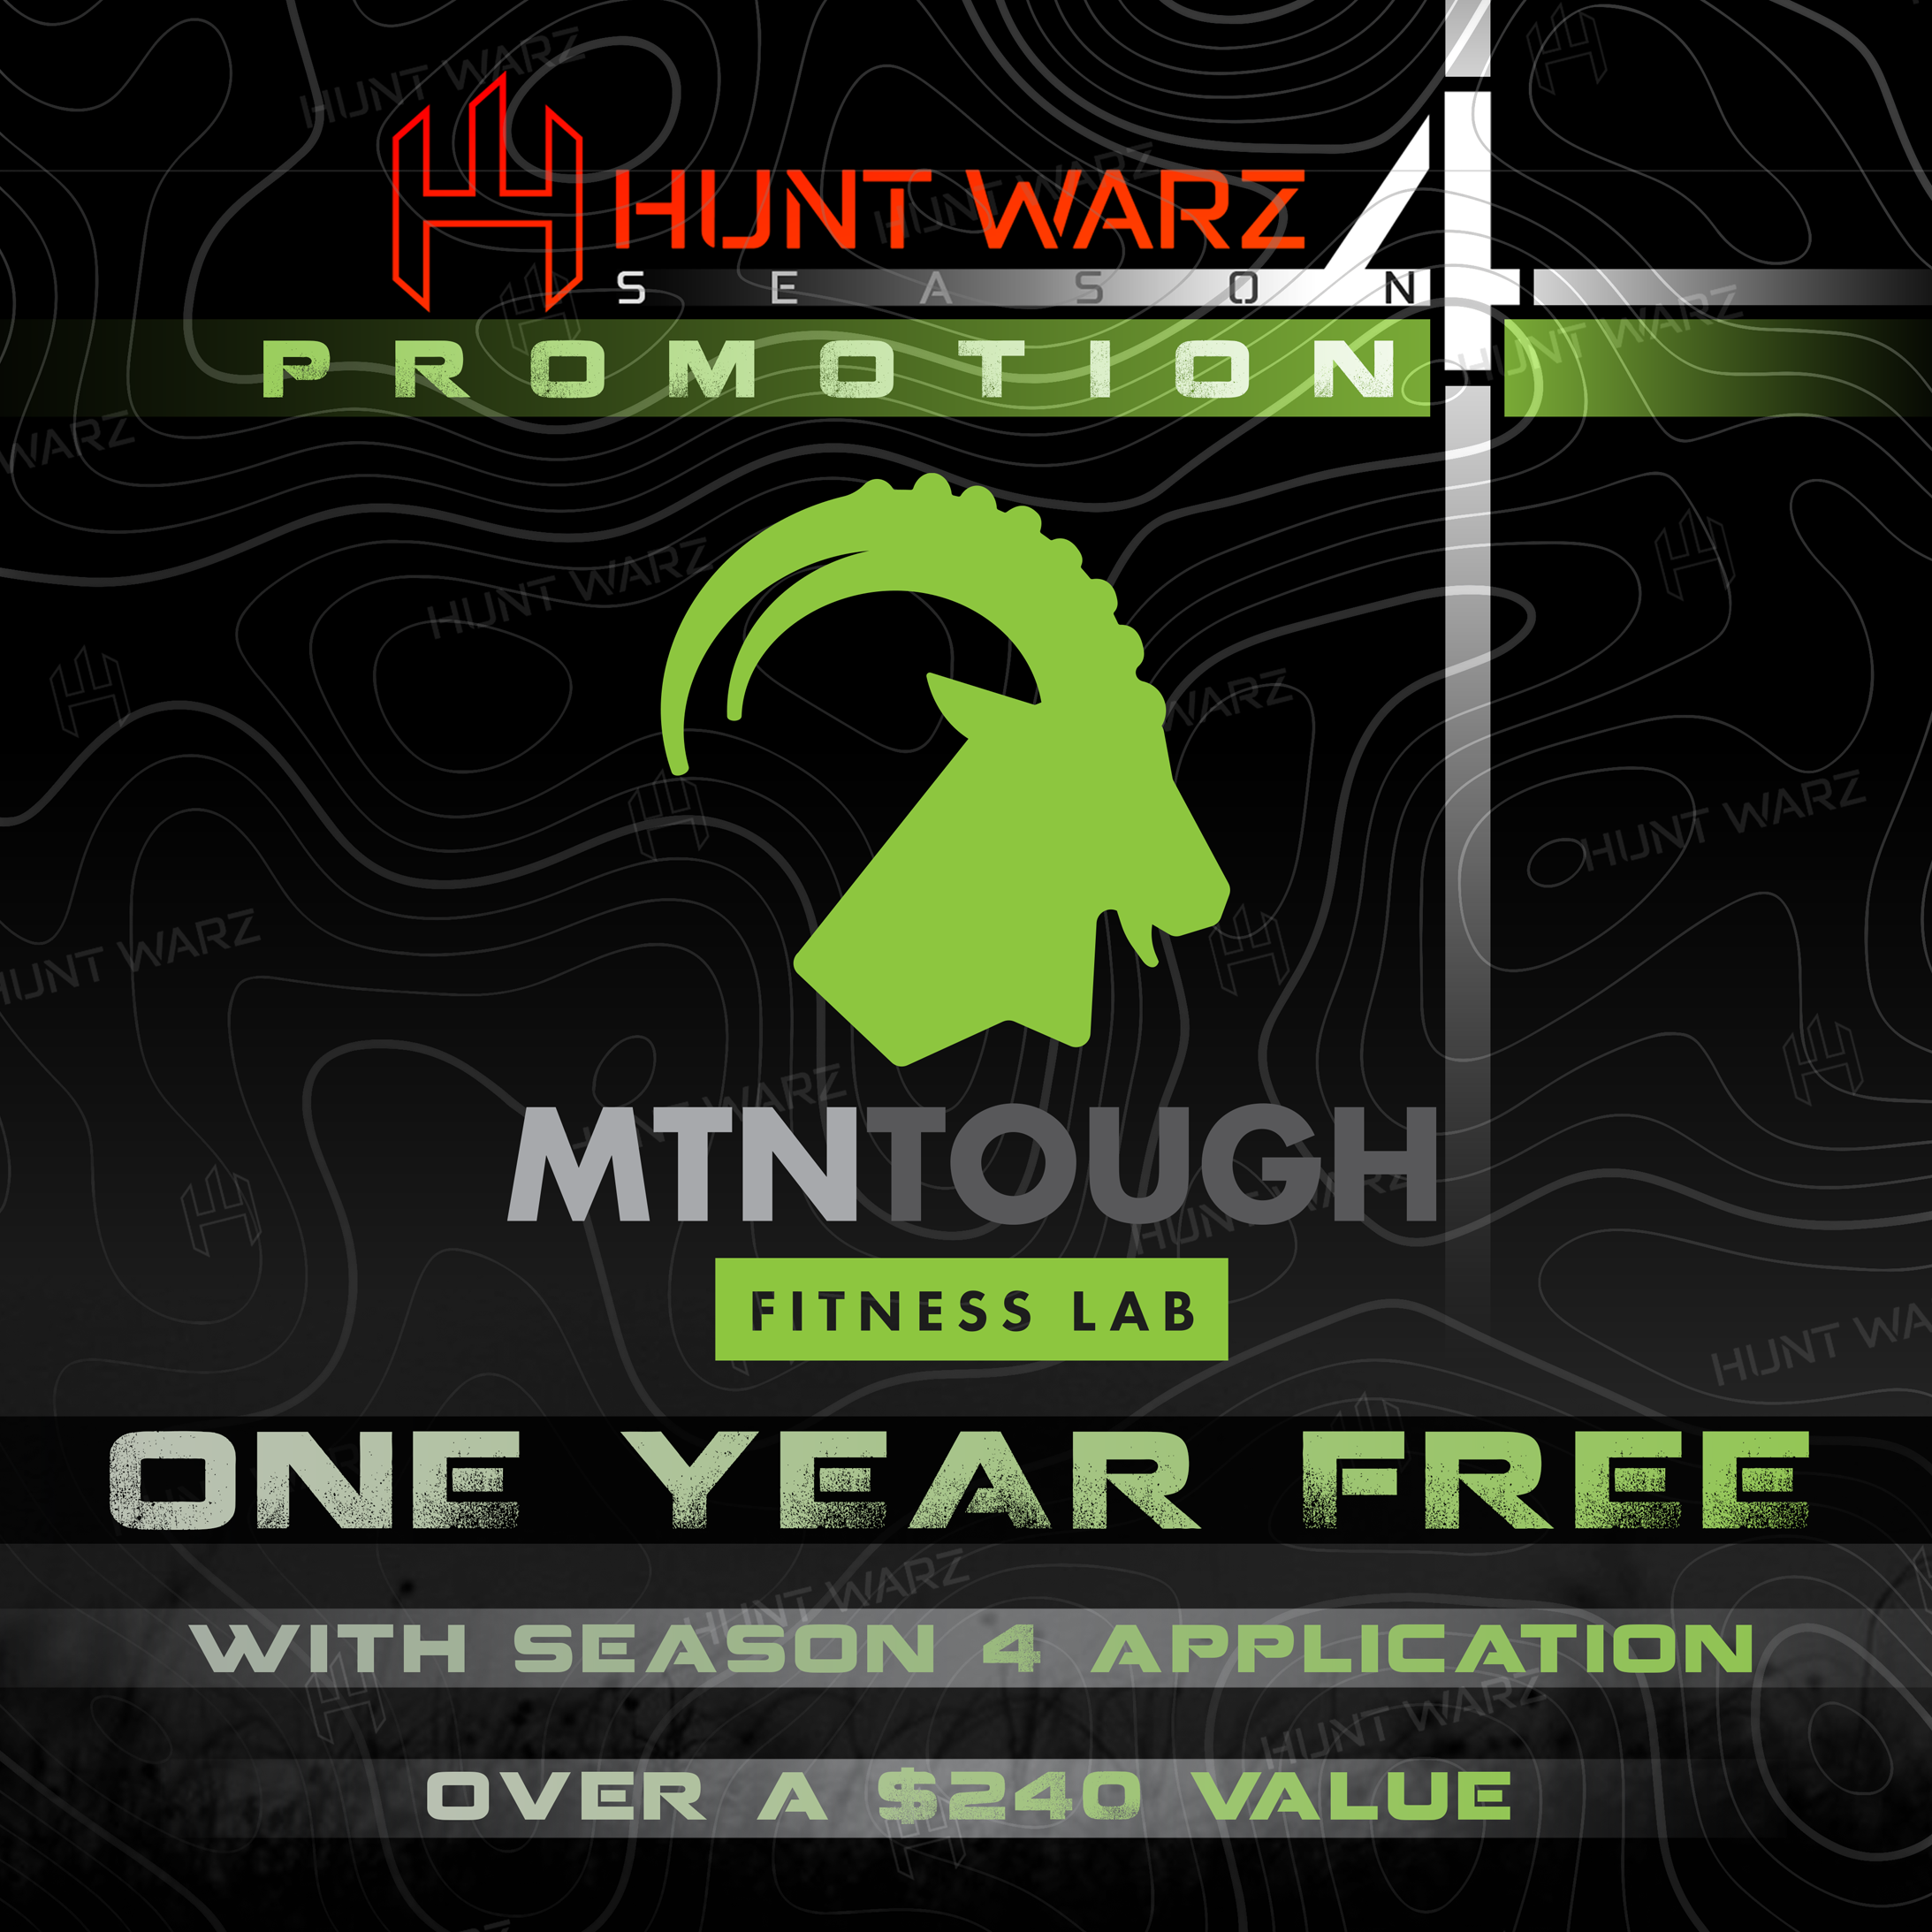 Hunt Warz MTN TOUGH partnership